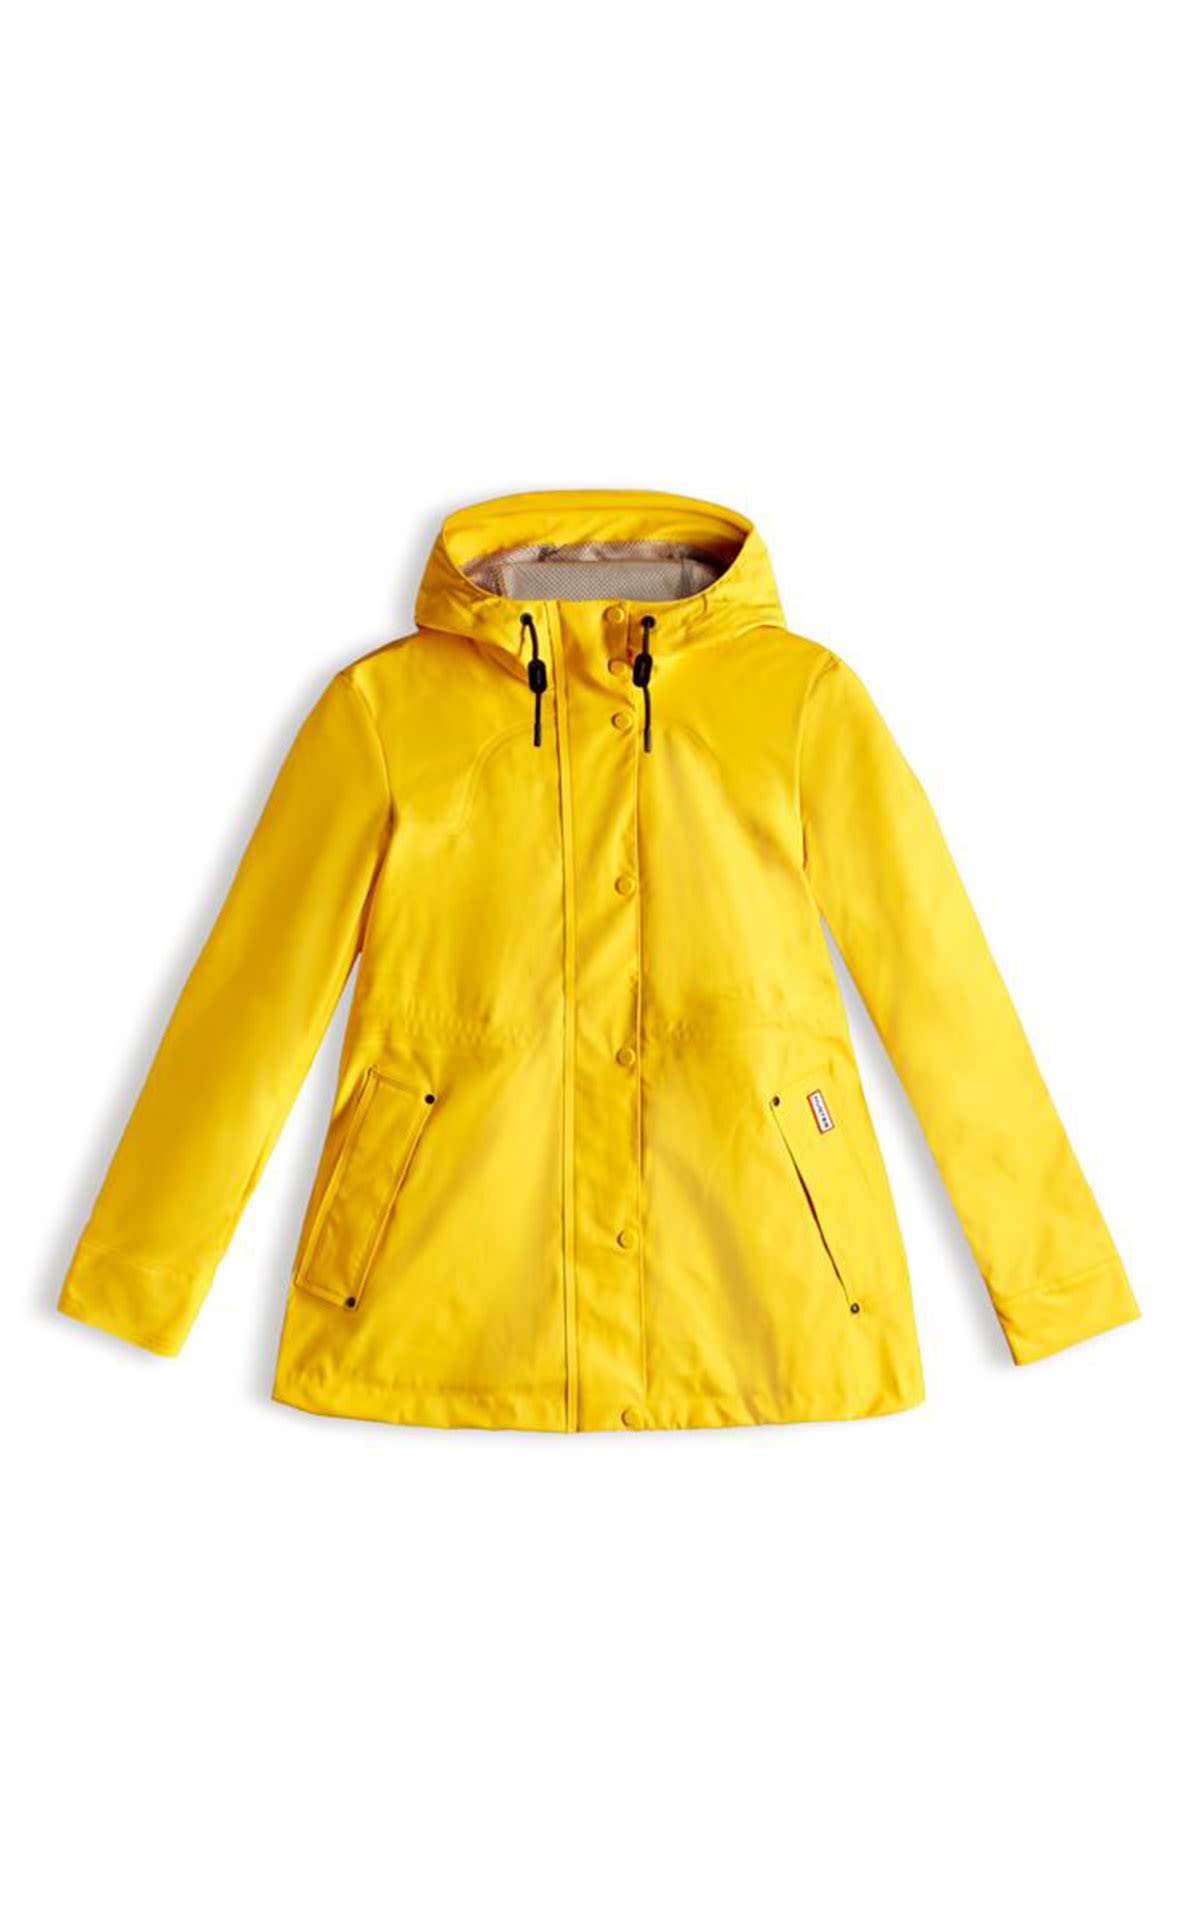 Hunter Women's lightweight rubberised jacket yellow from Bicester Village